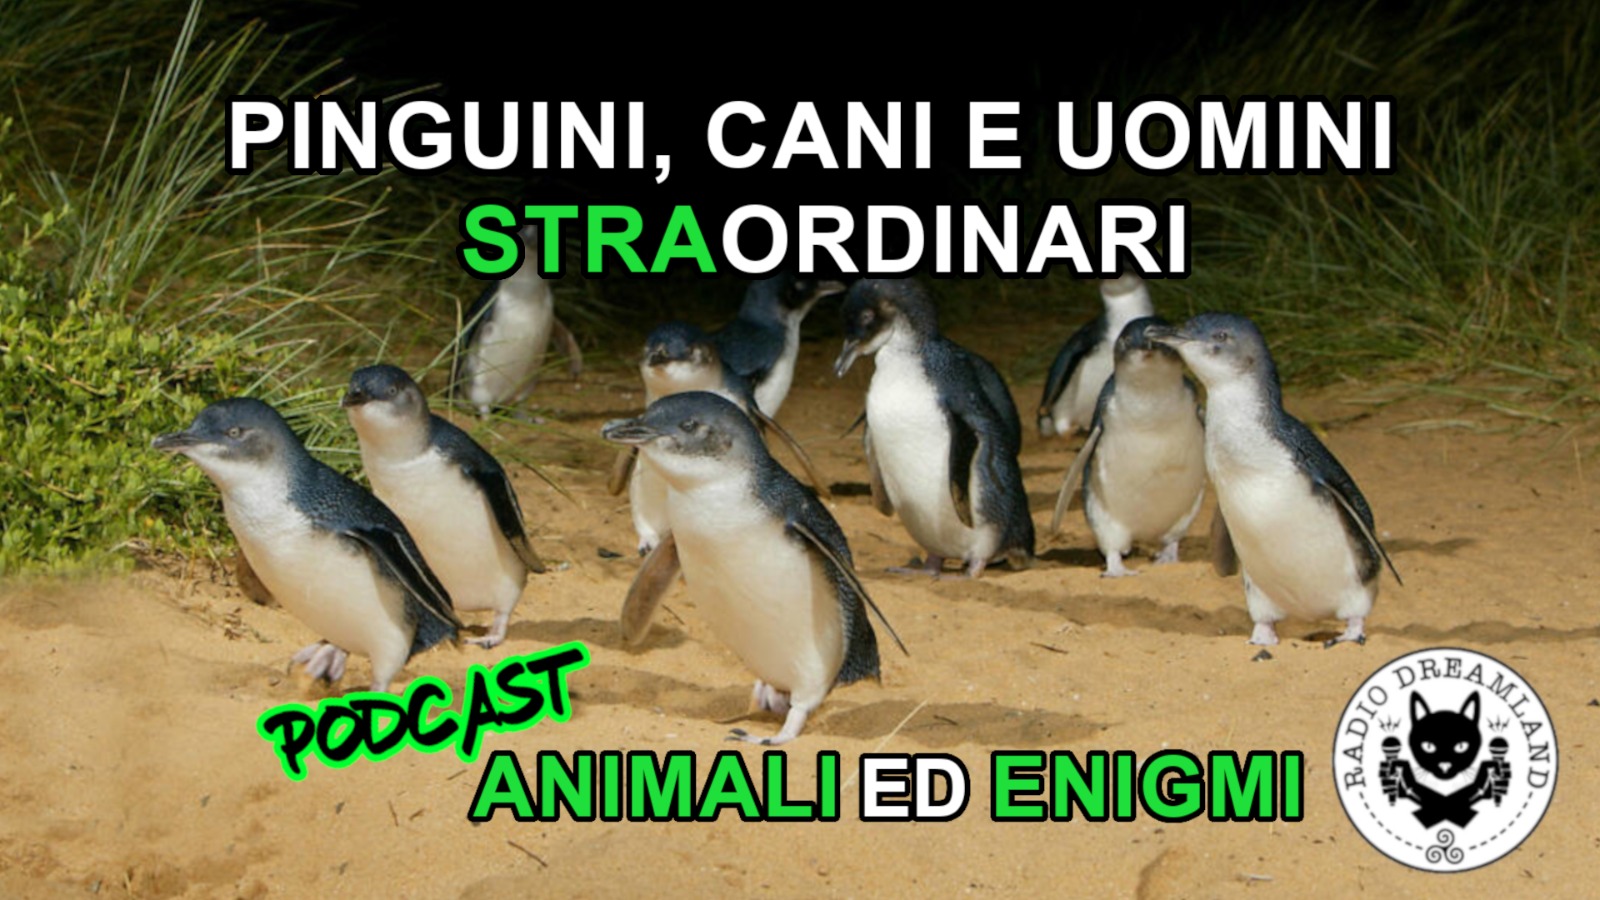 Radio Dreamland - Animali ed Enigmi